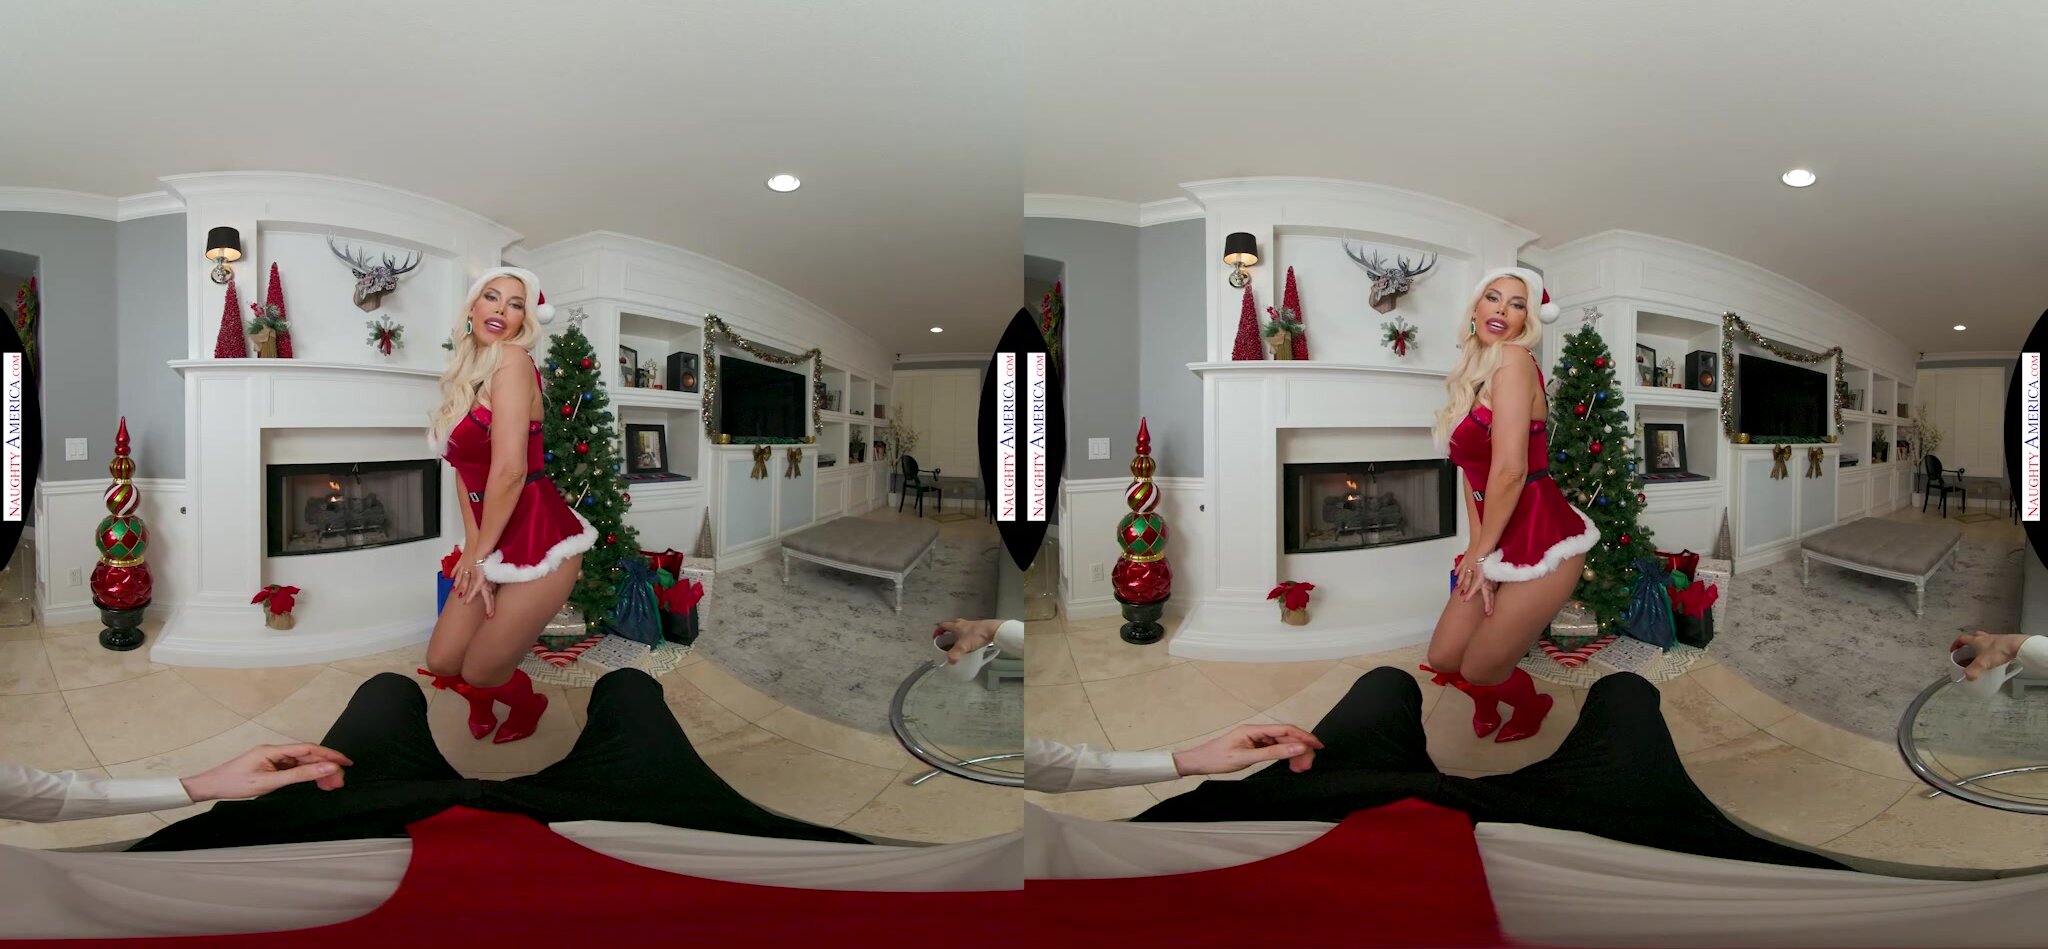 Bridgette B - Naughty America VR